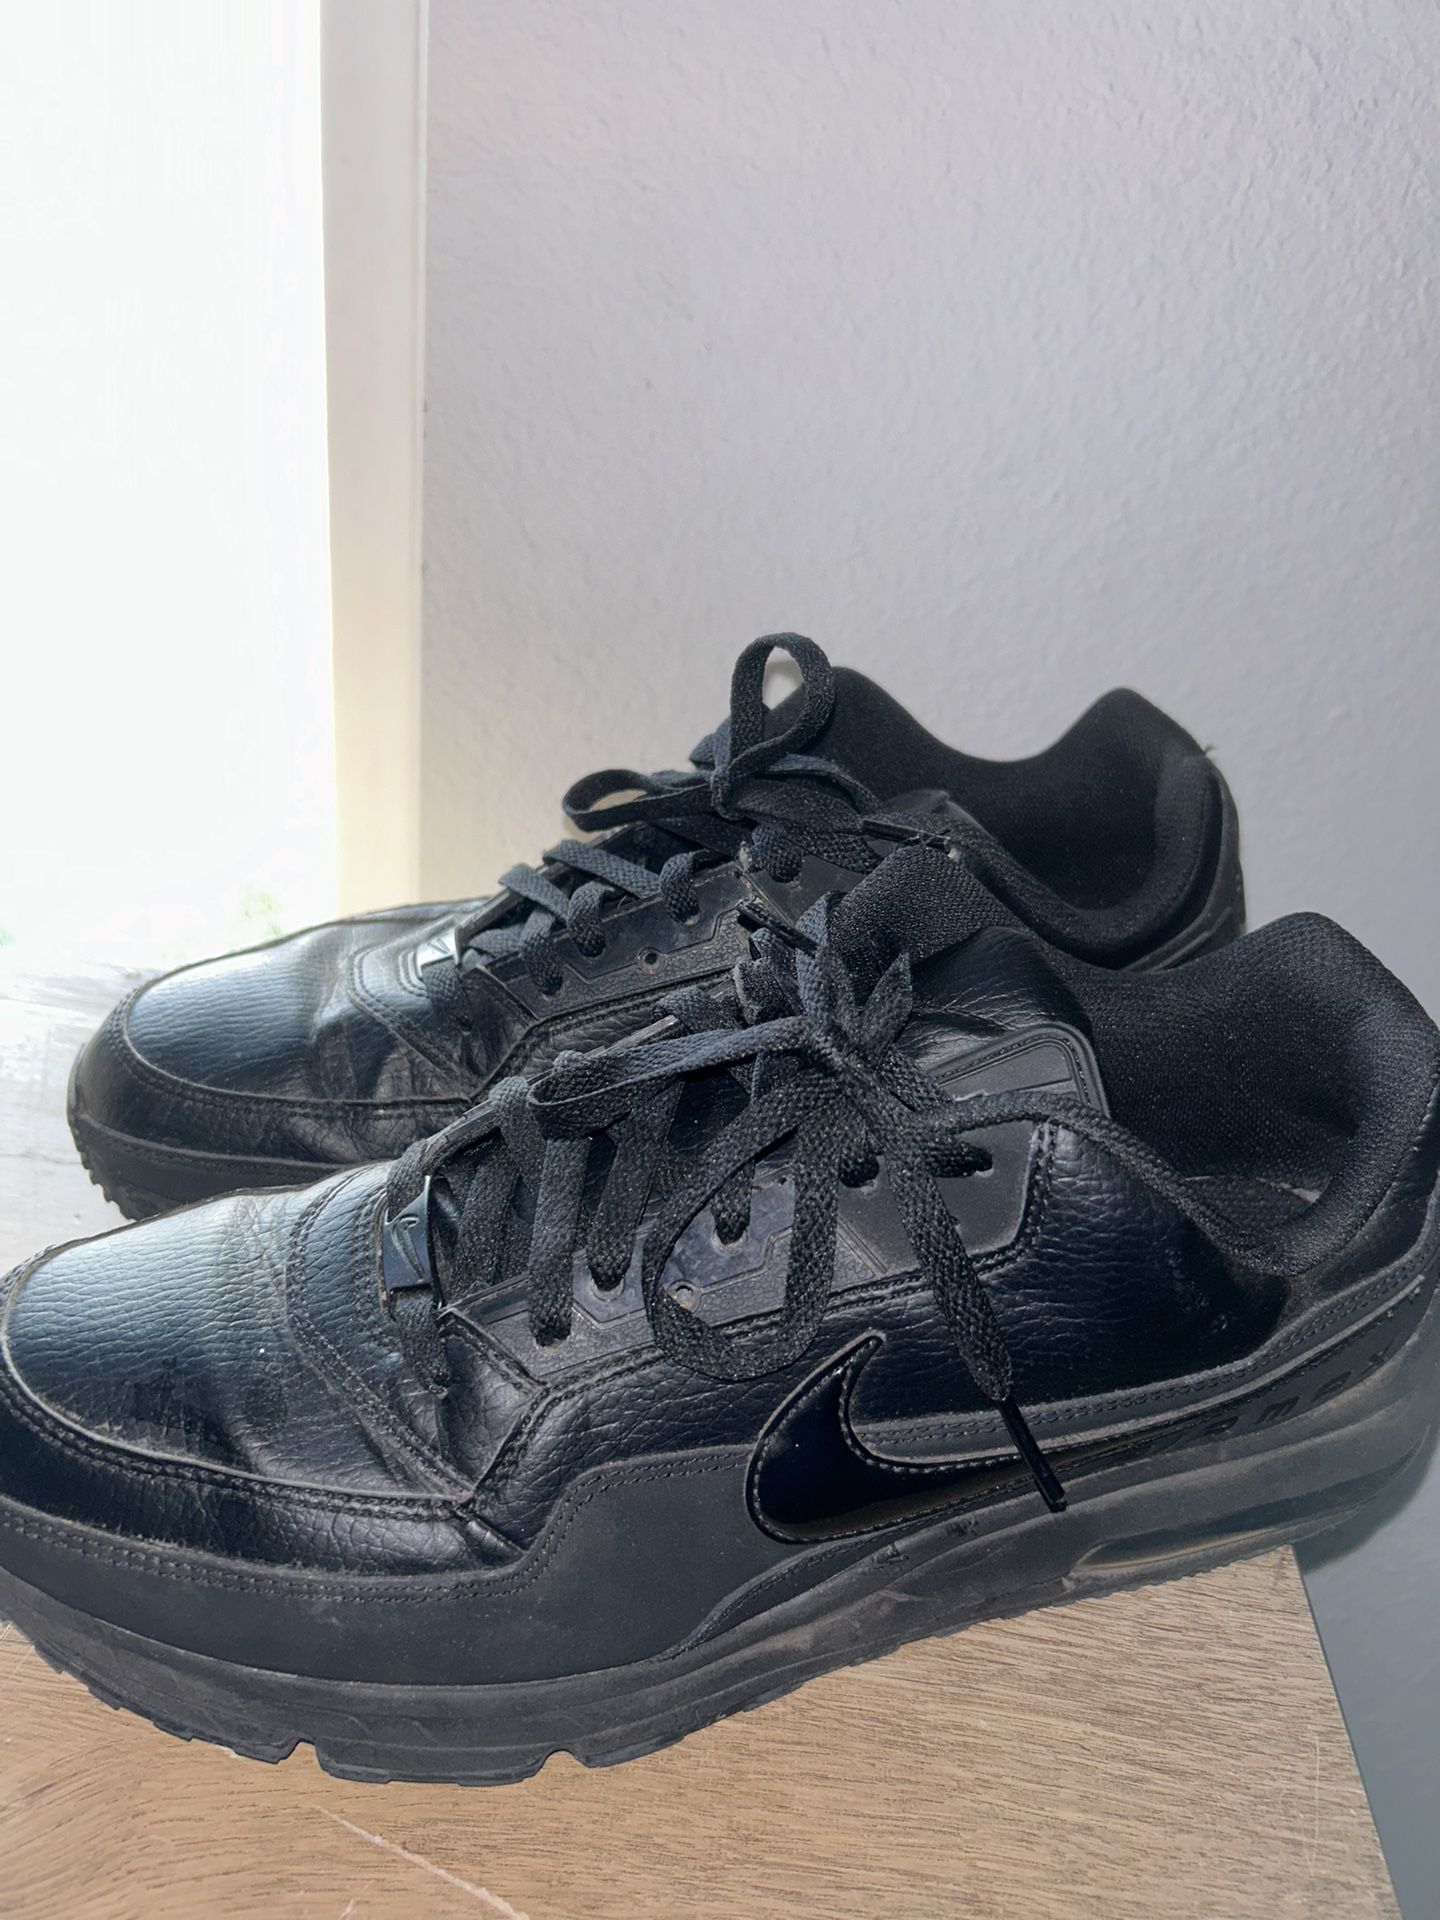 Nike Air Max Size 11 Shoe